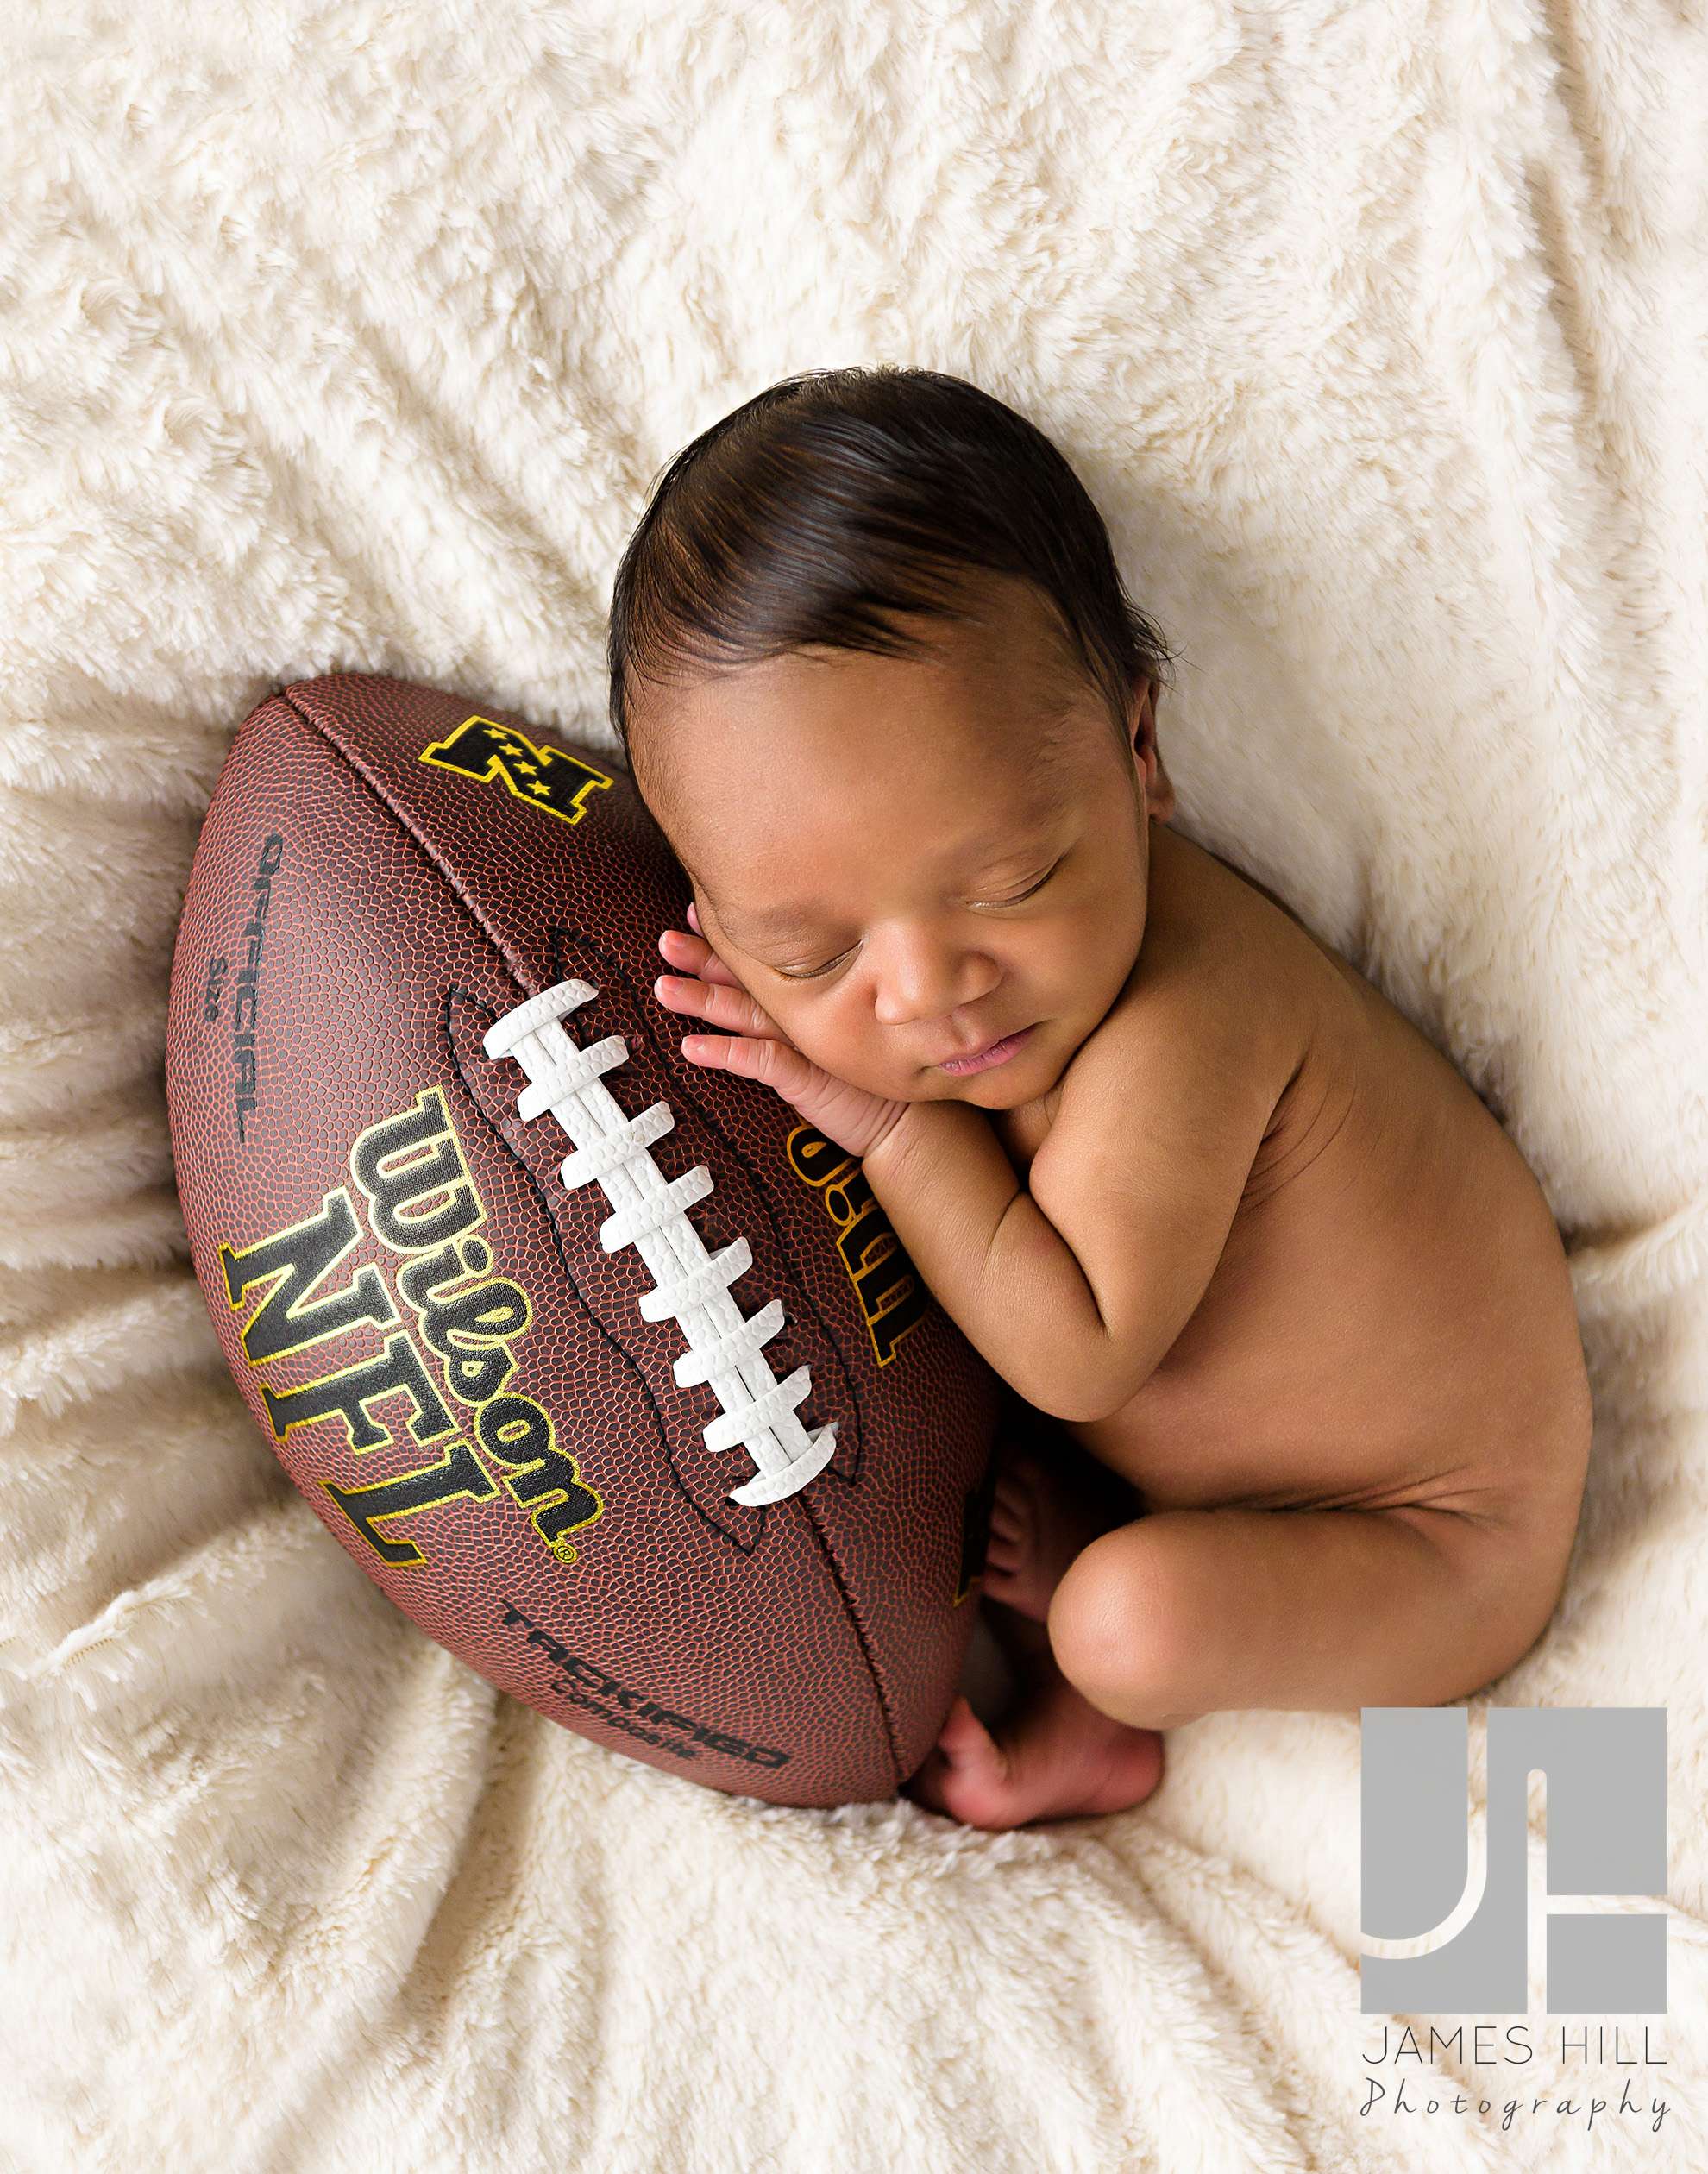 baby holding football